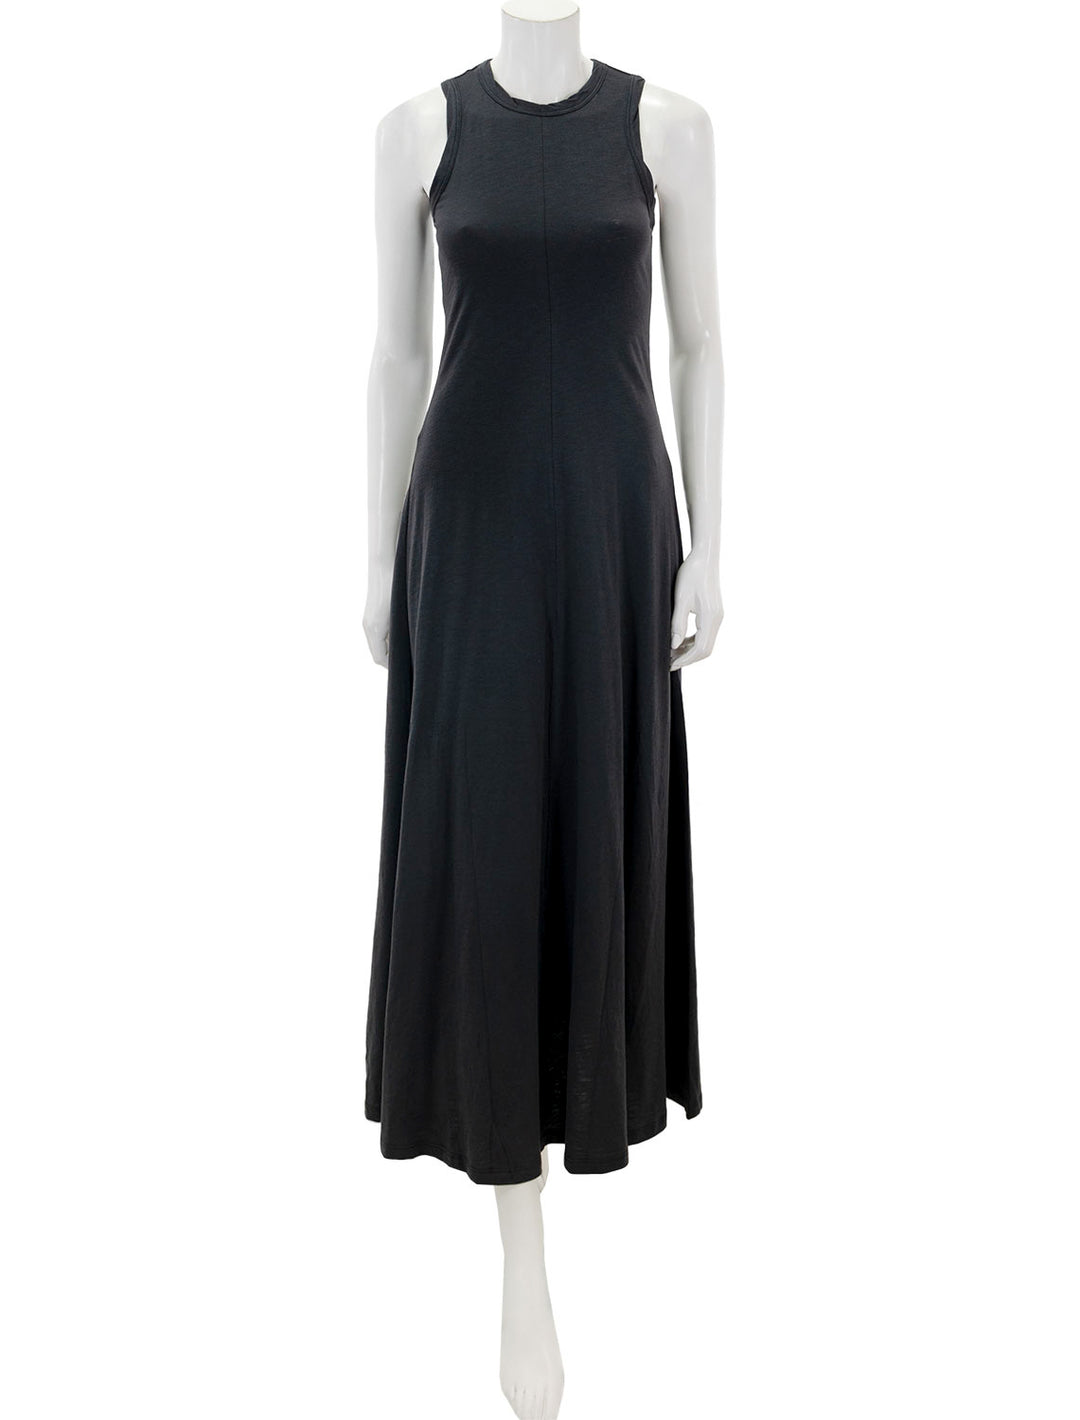 Front view of Rag & Bone's sadie knit dress in black.